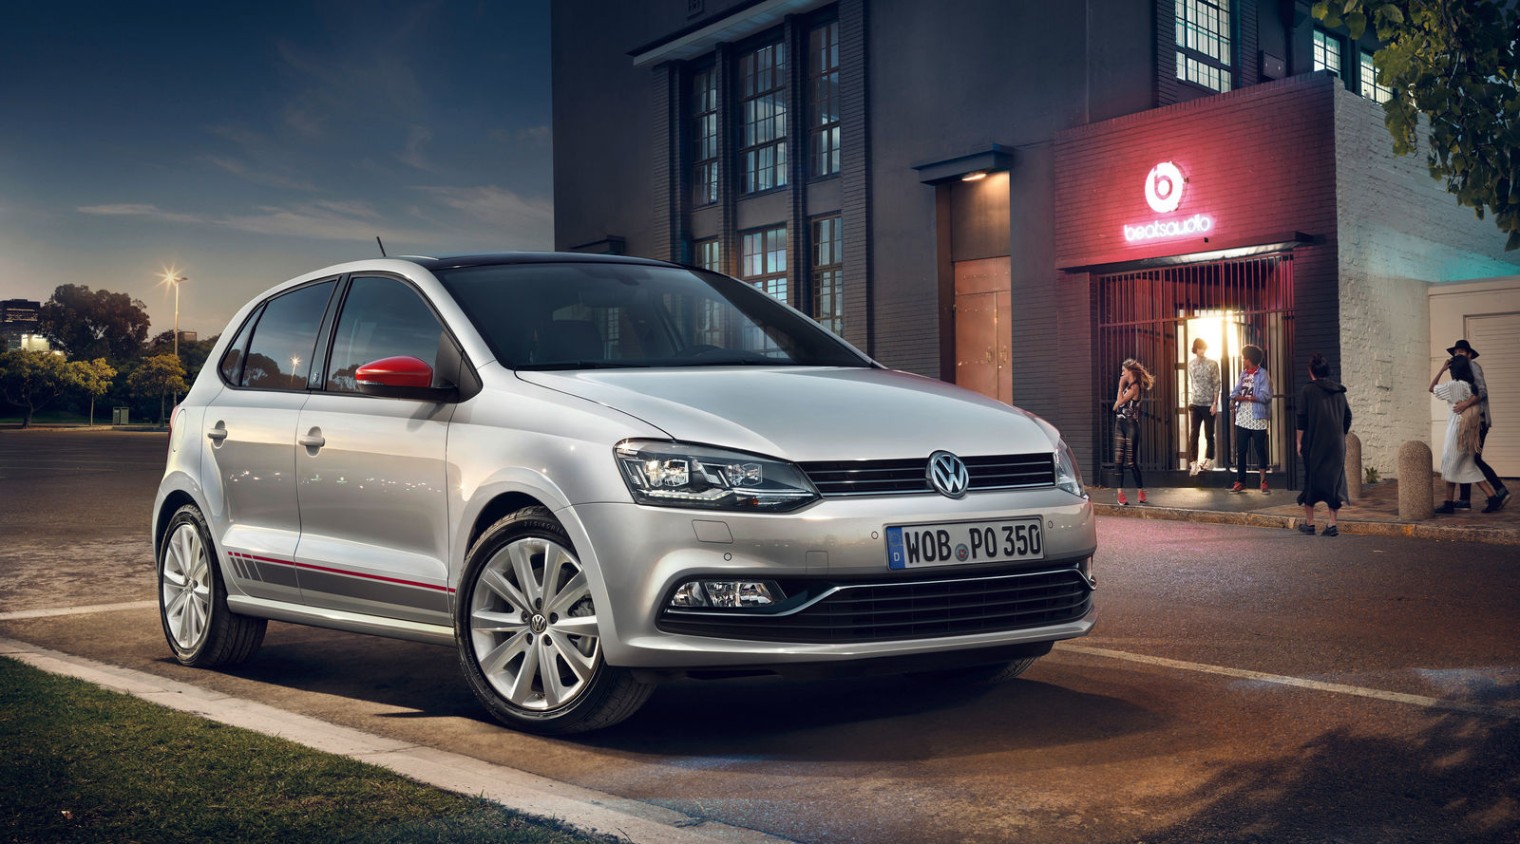 Unüberhörbar: Volkswagen Polo beats ist ab sofort bestellbar